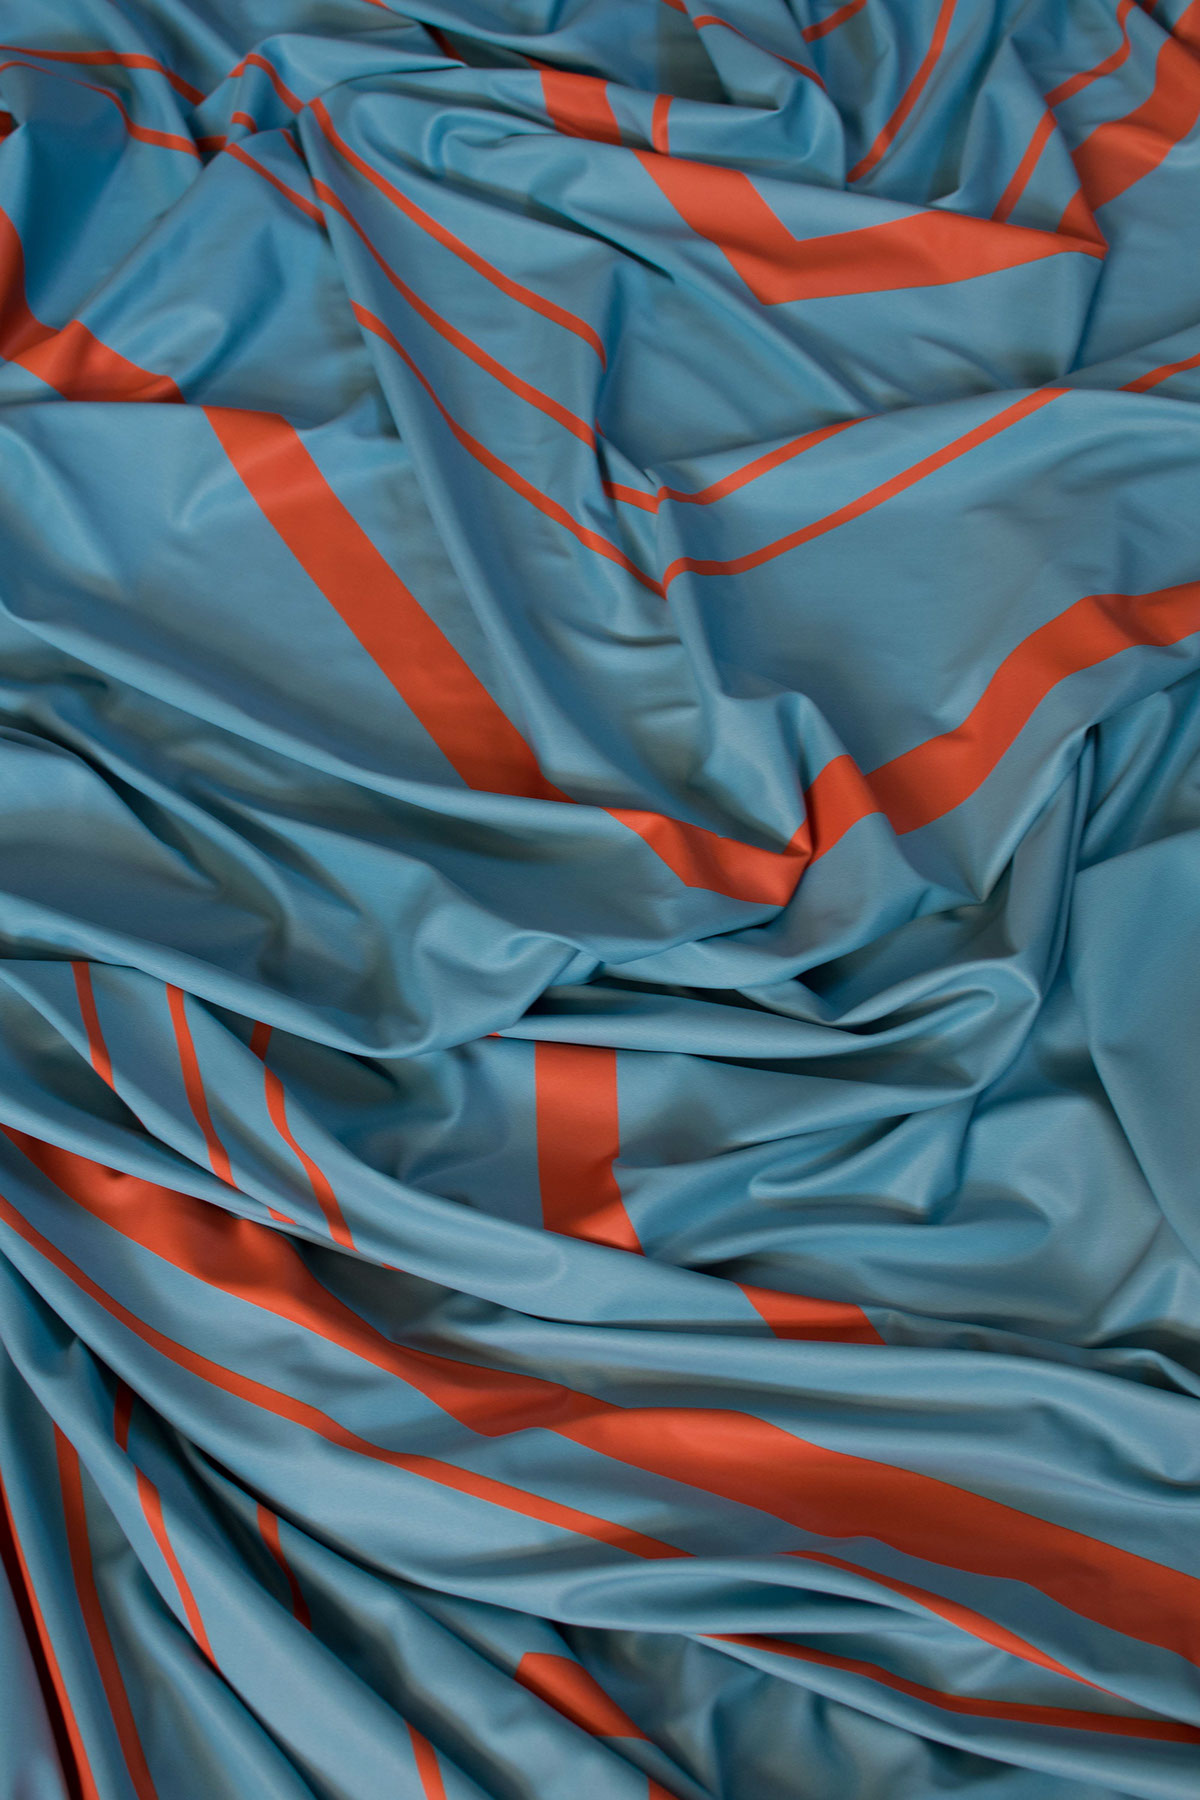 pattern geometric design geometric Rug Throw-rug orange turquoise